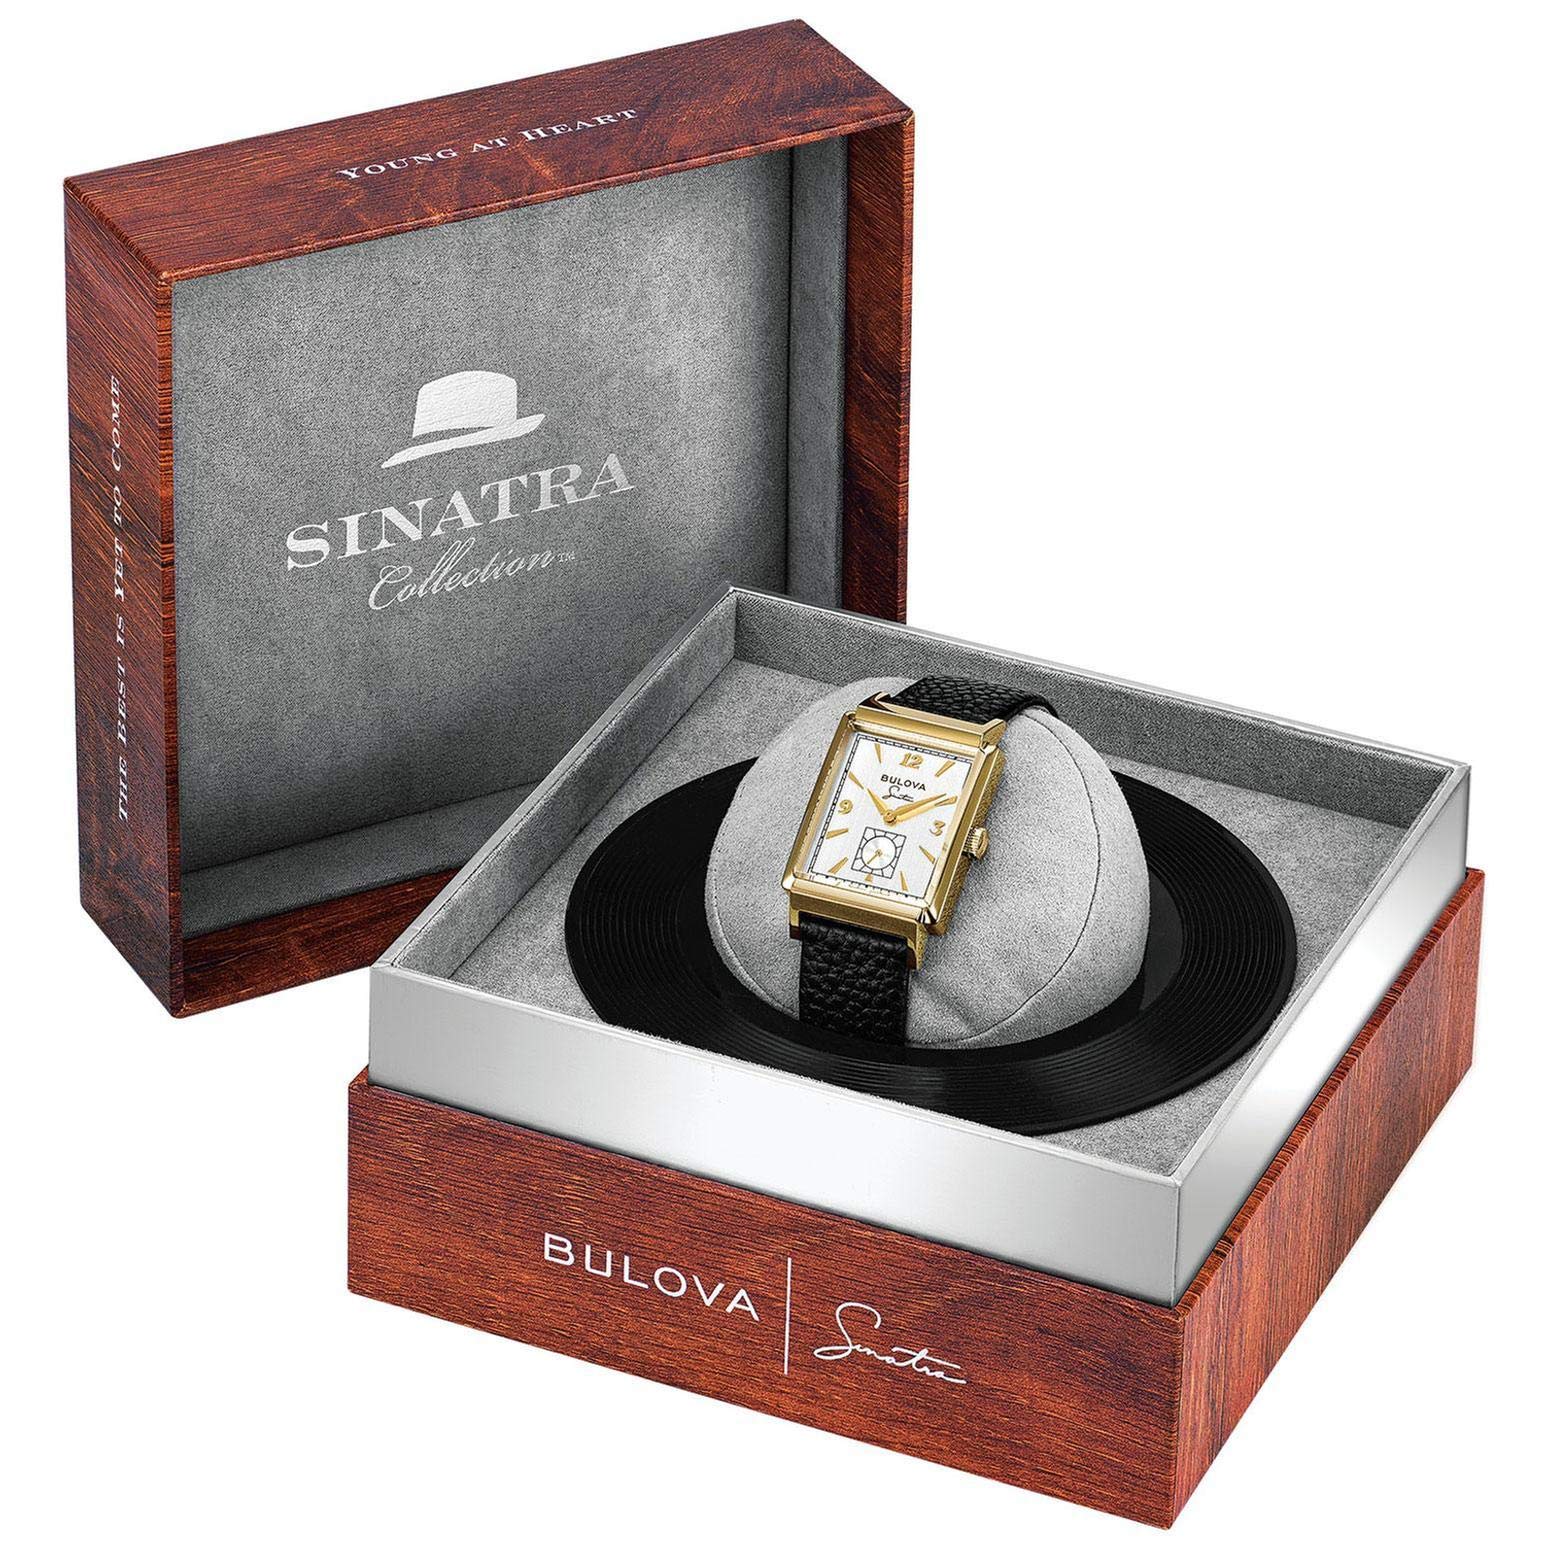 Bulova Men's Frank Sinatra My Way Leather Strap Watch